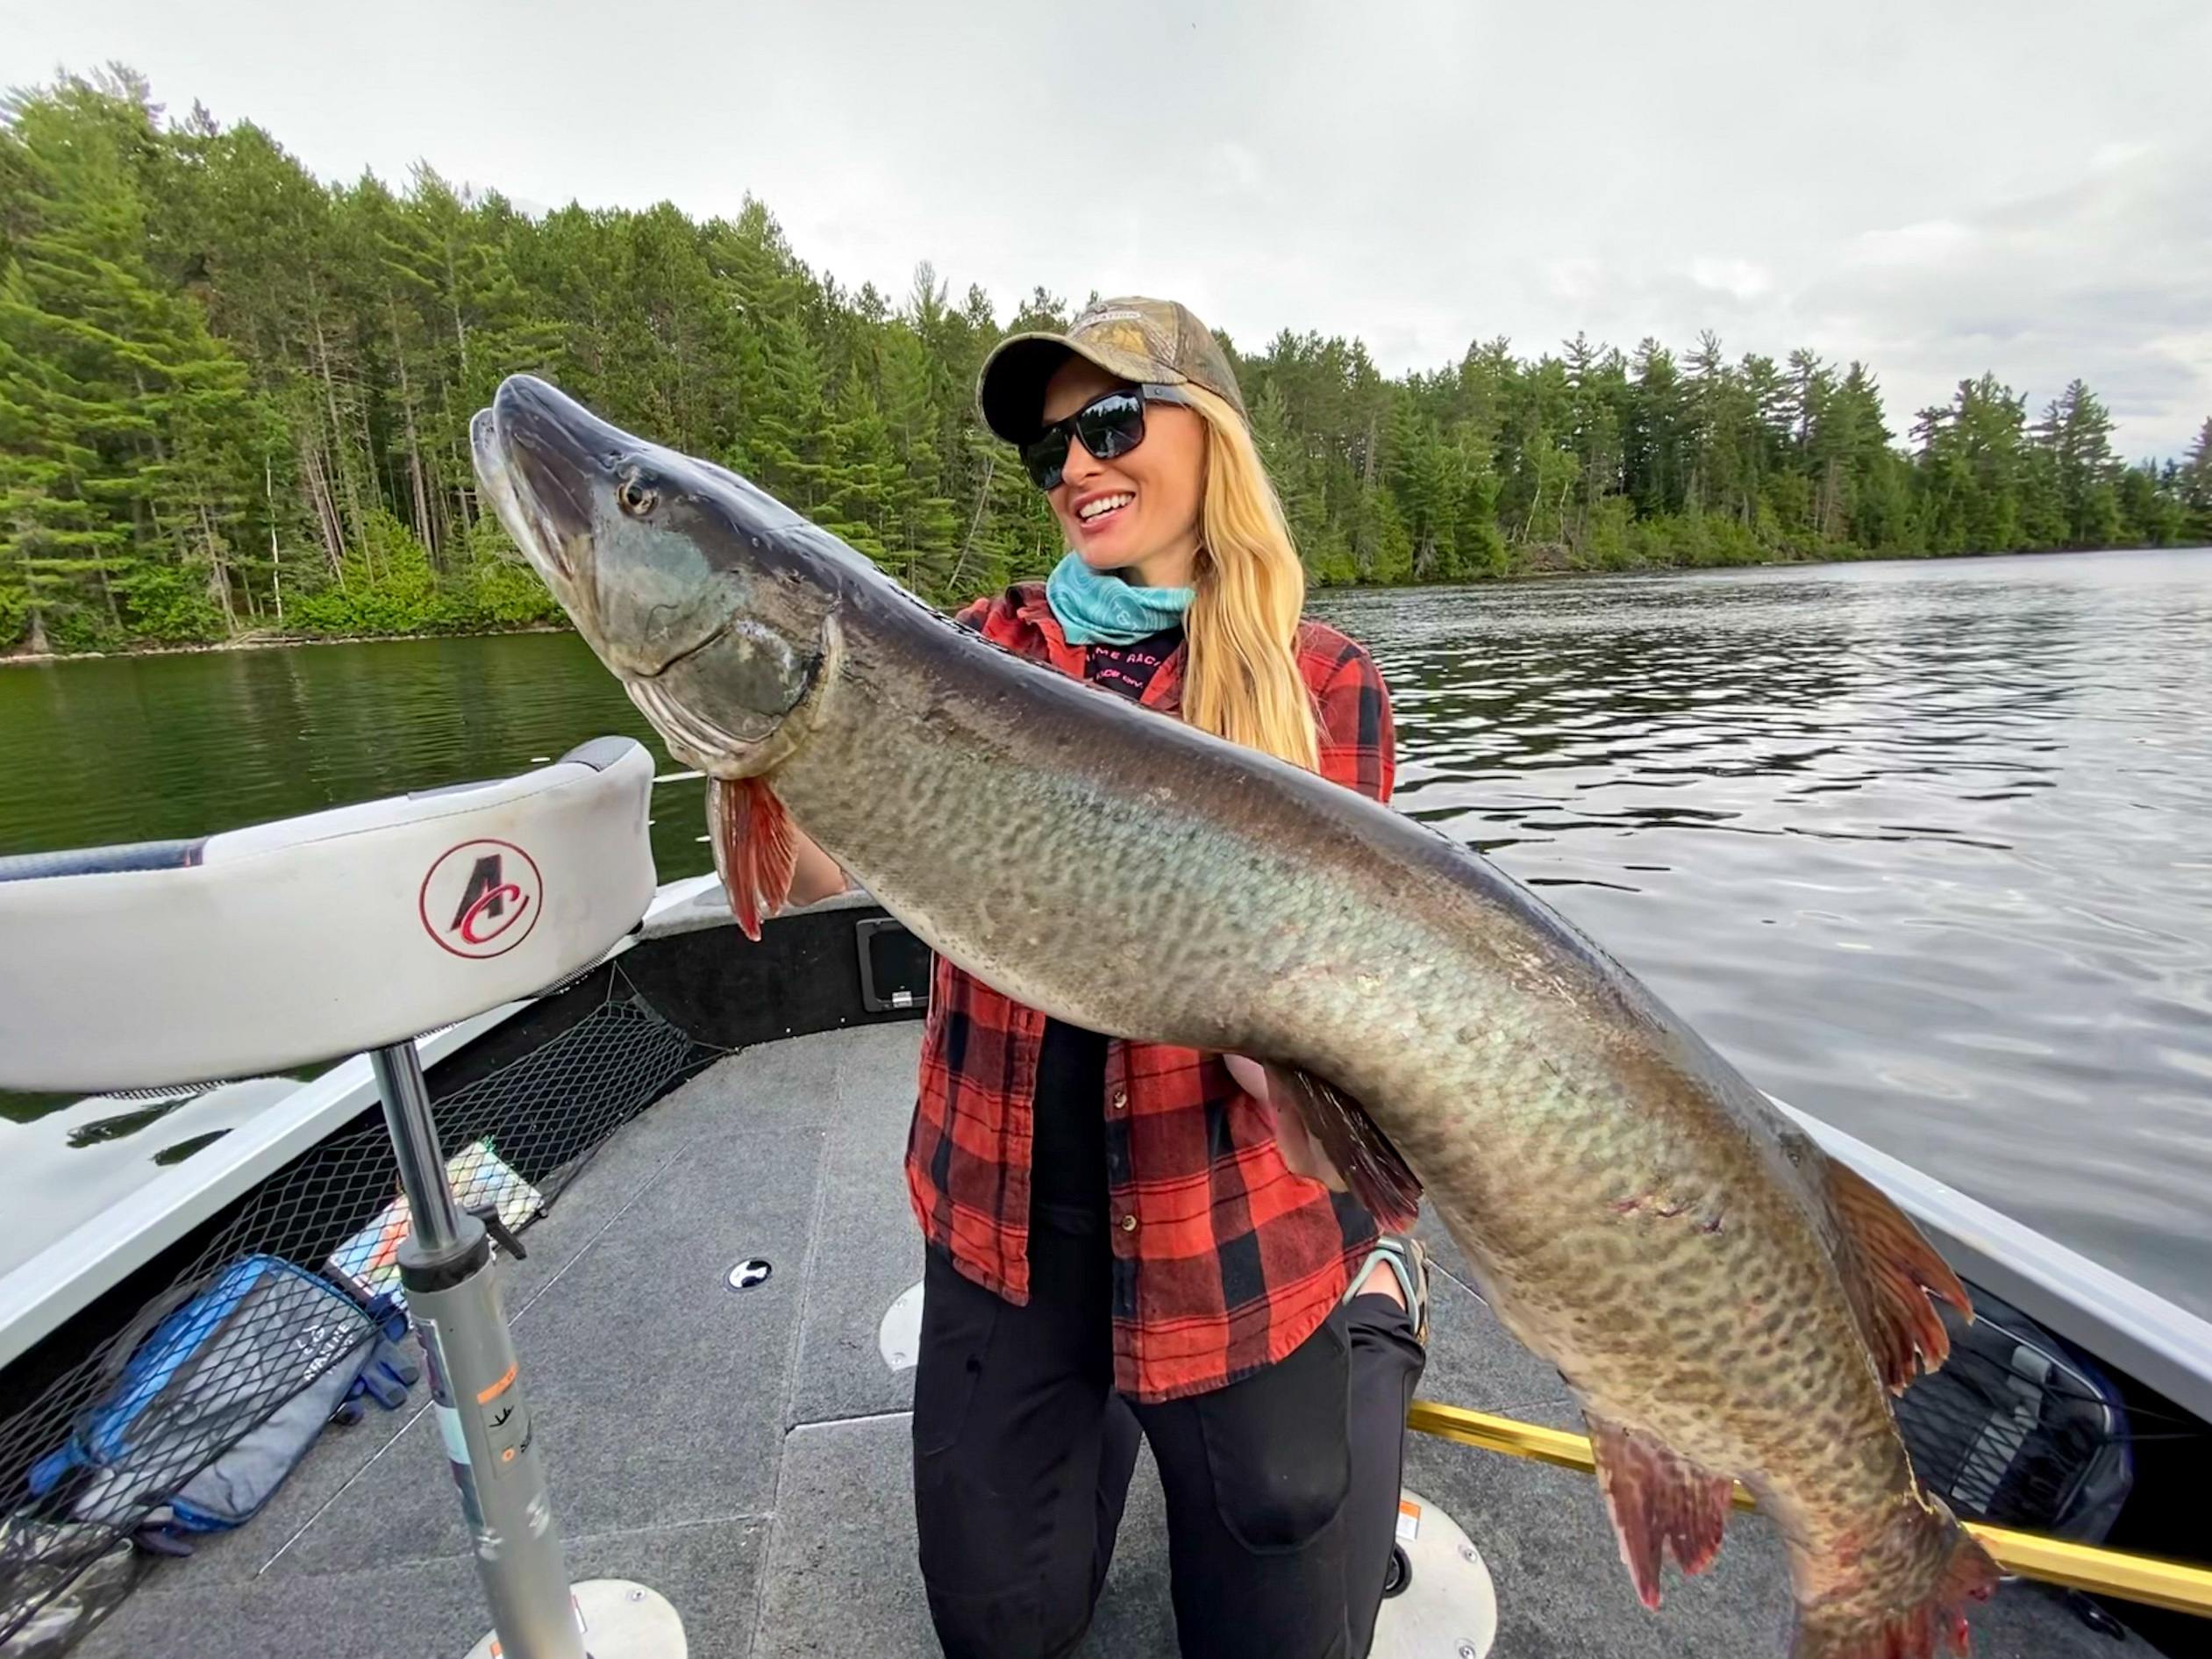 Alumacraft ambassador Rebekka Redd showing off a big catch